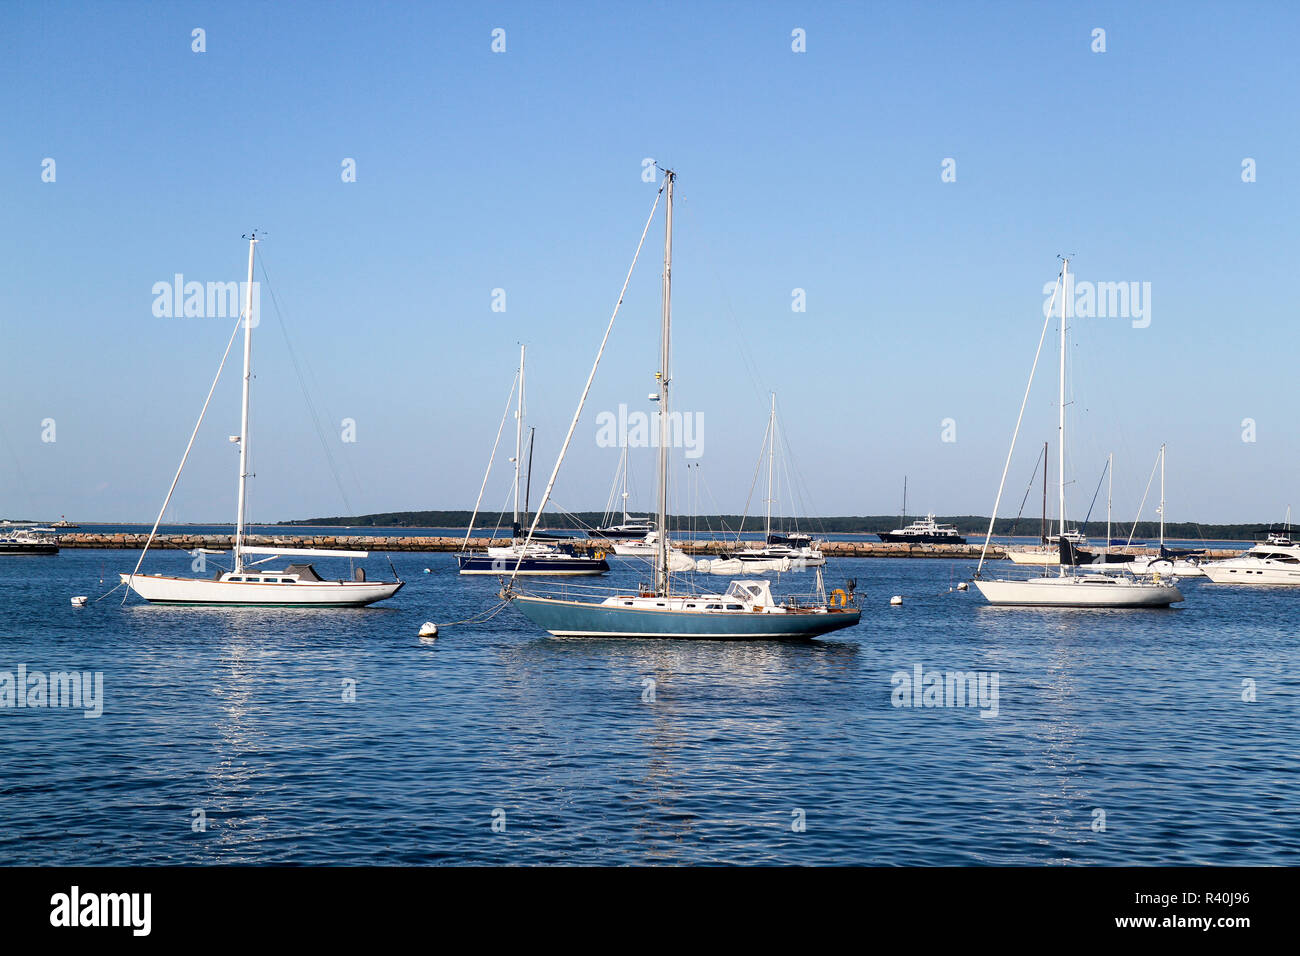 Sailboats in the harbor, Sag Harbor, New York, Usa. Stock Photo